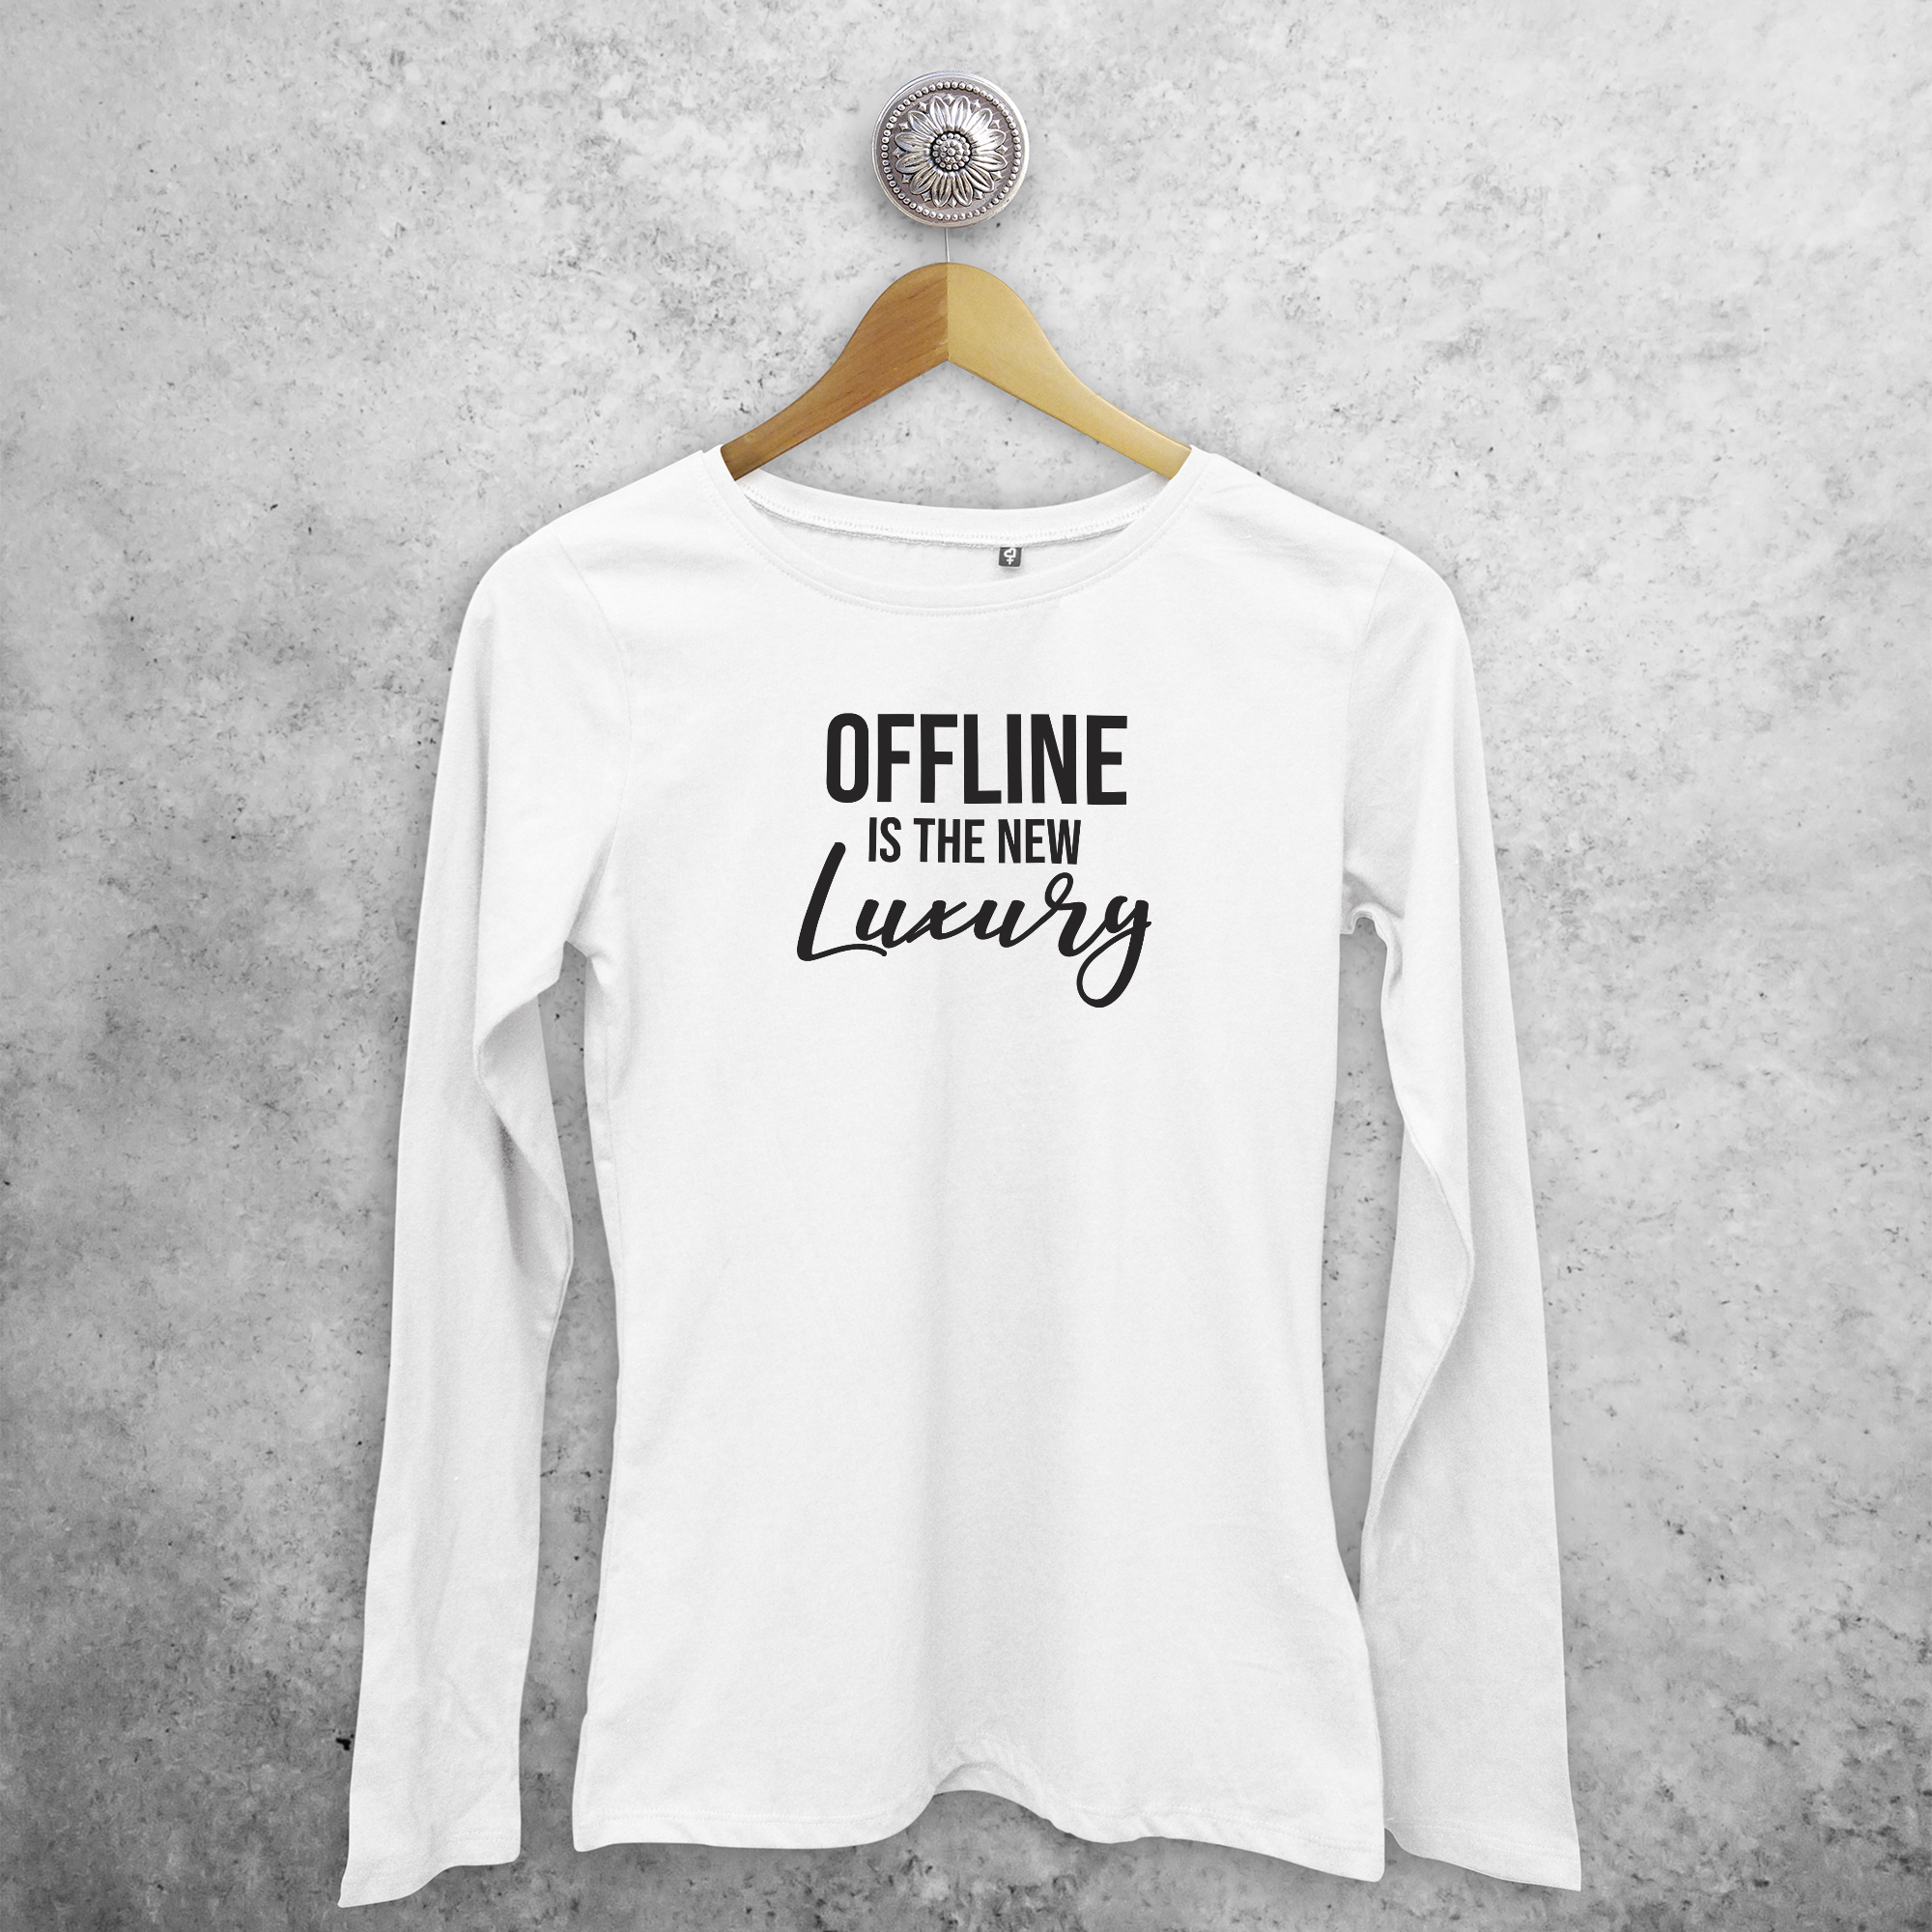 'Offline is the new luxury' adult longsleeve shirt